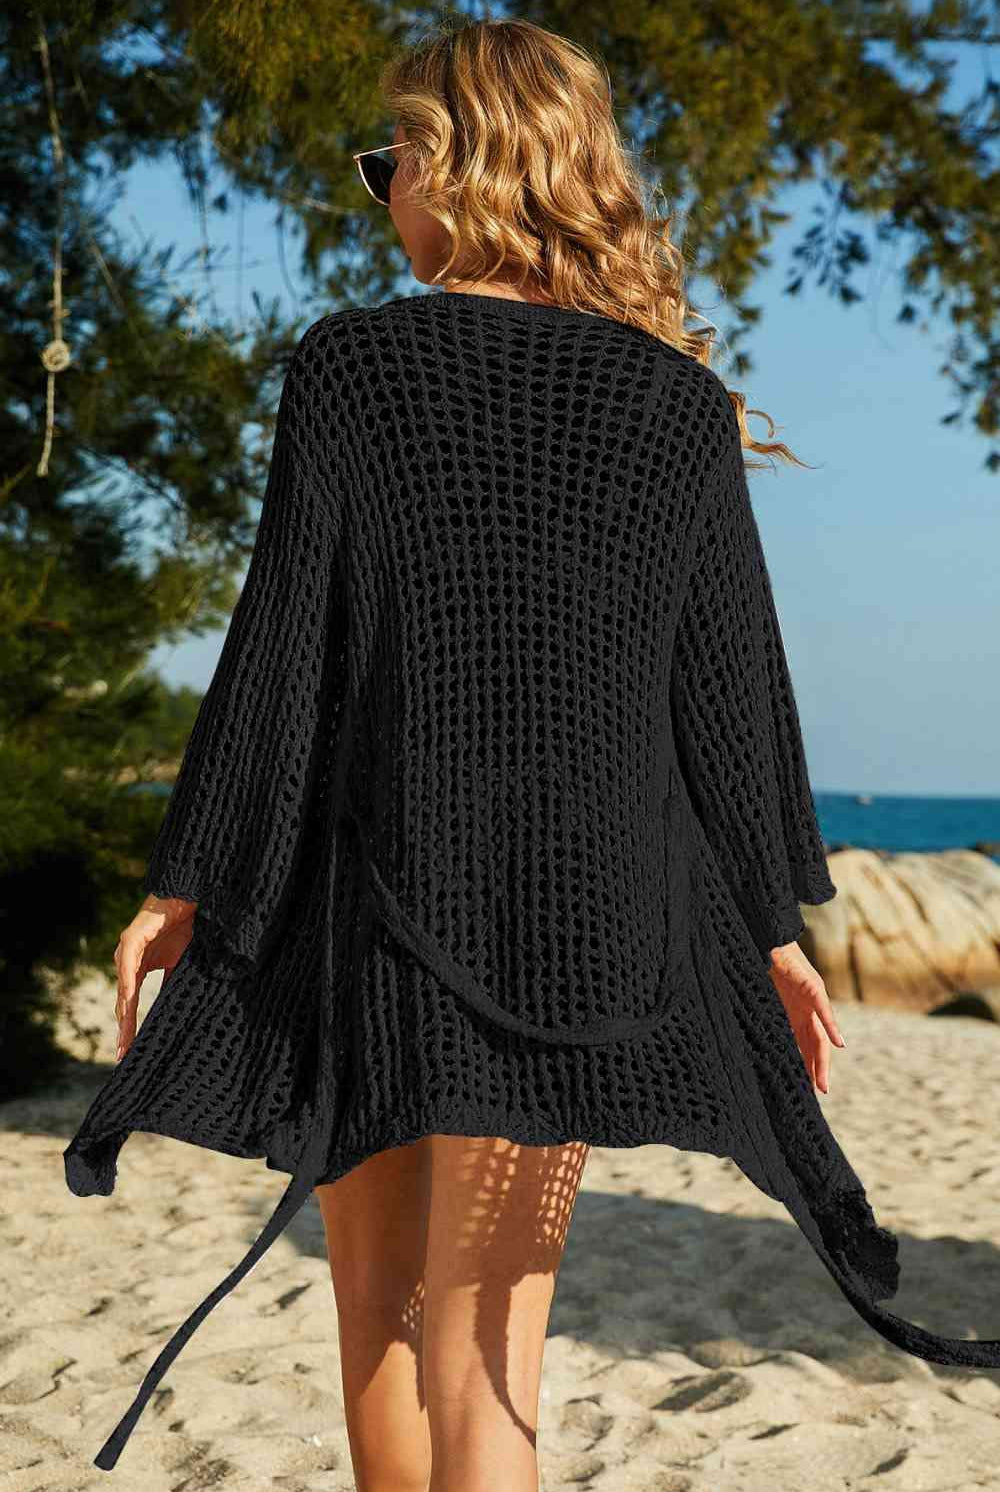 Women's Swimwear - Cover Ups Tie-Waist Openwork Crochet Cover Up